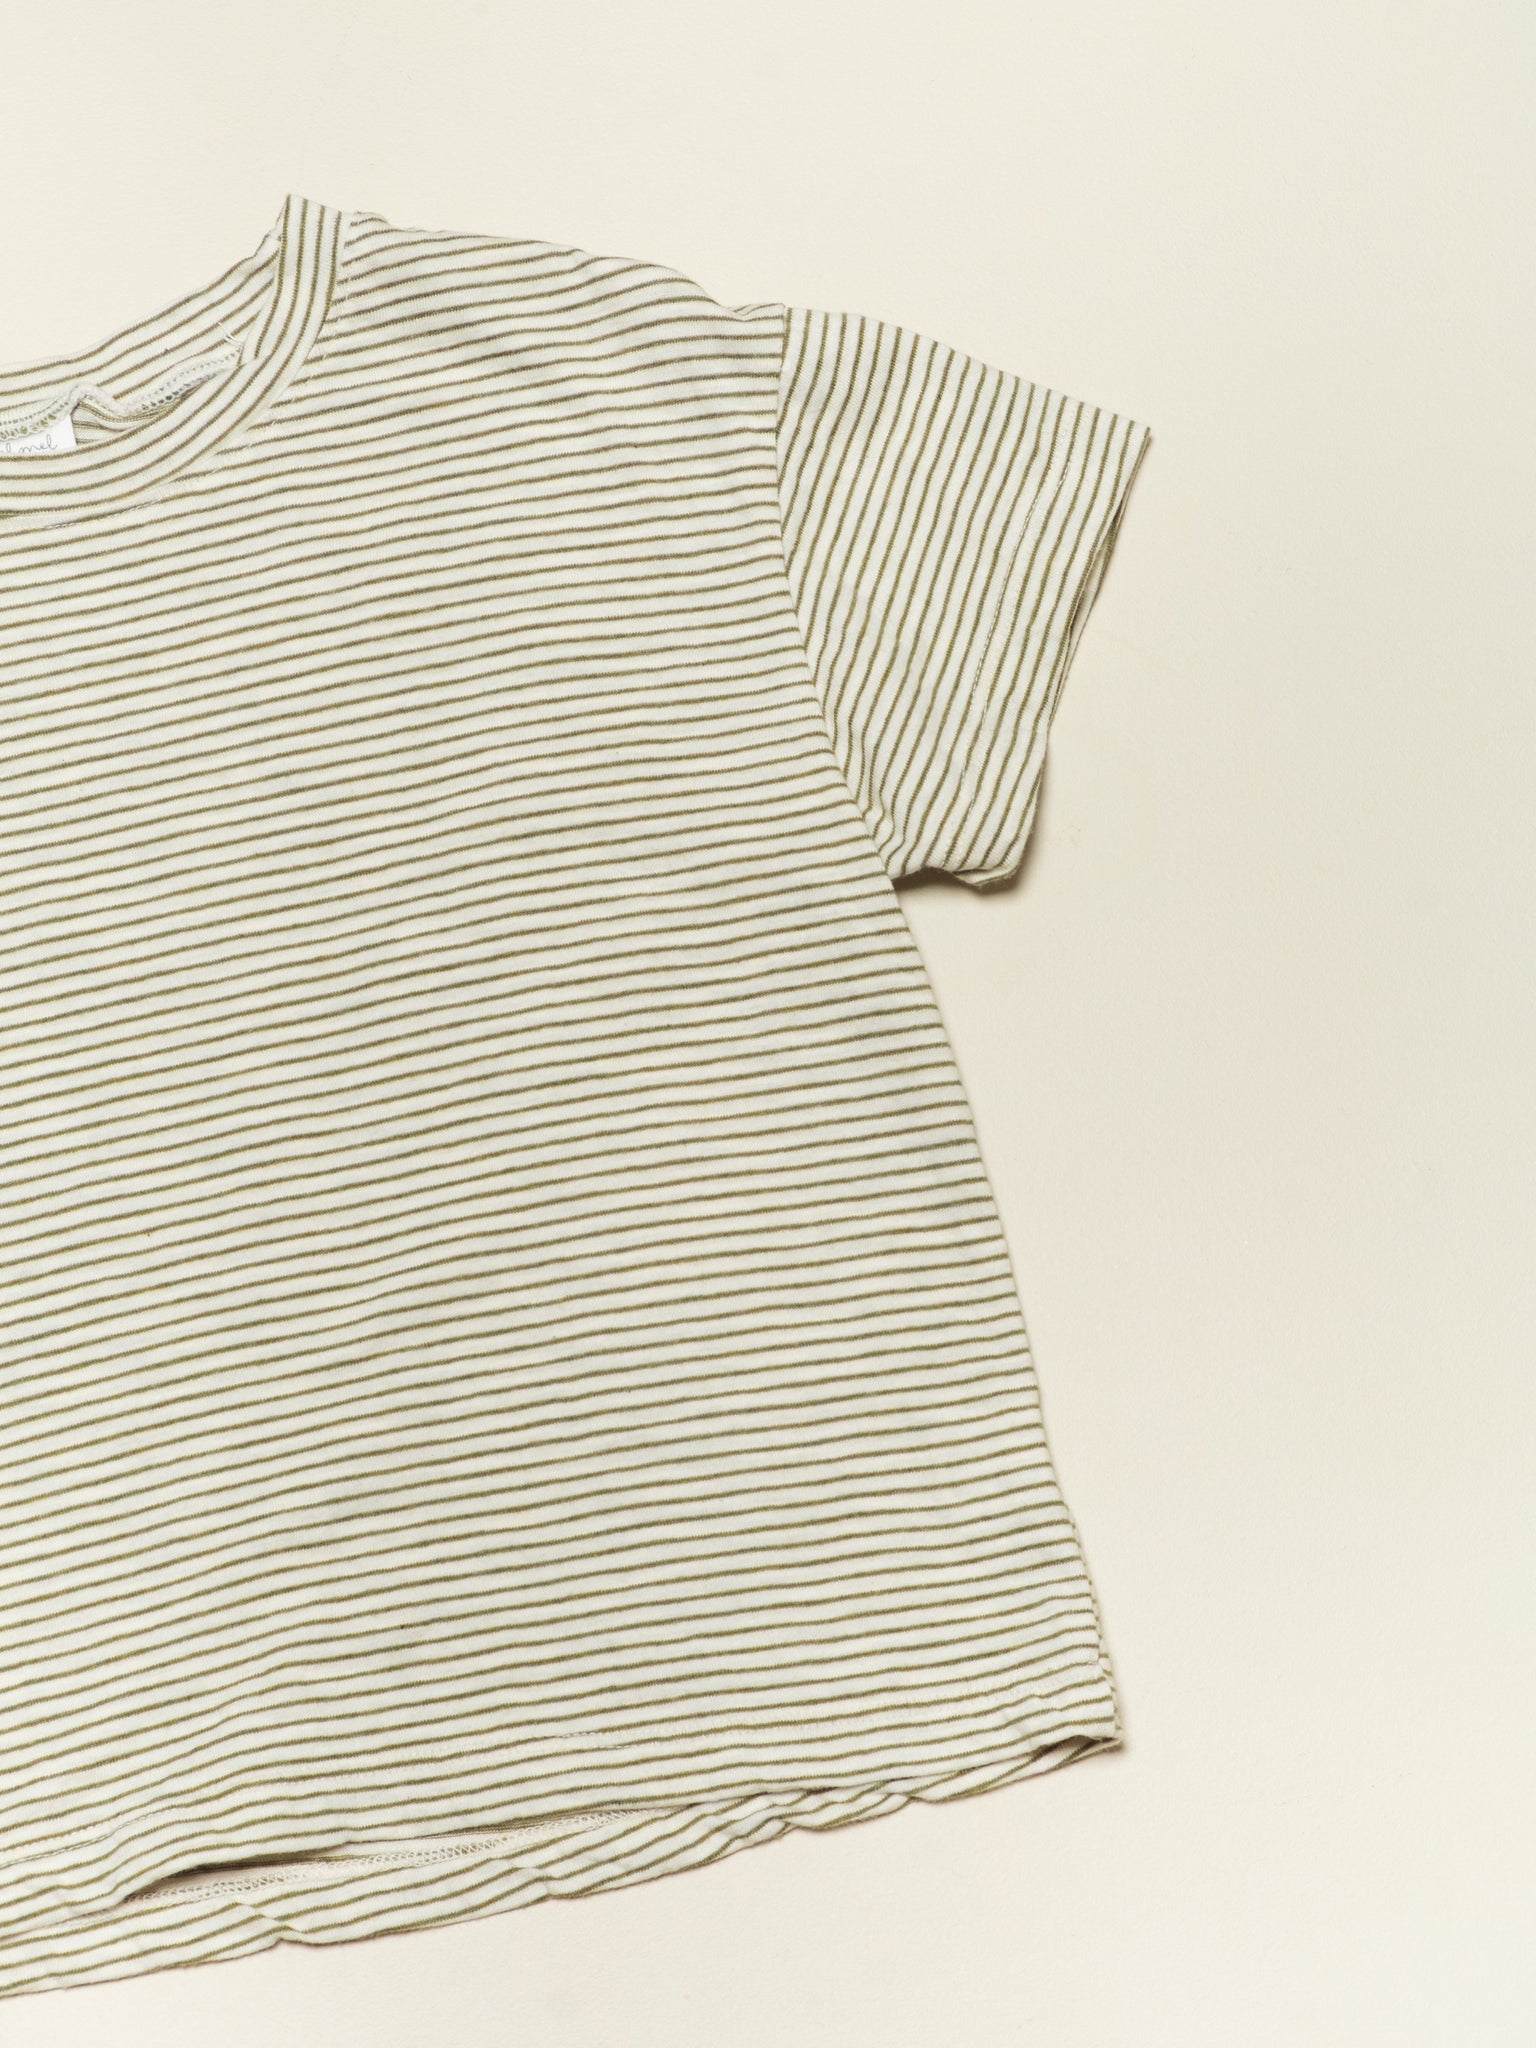 Everyday Tee - Short sleeves Olive Stripe